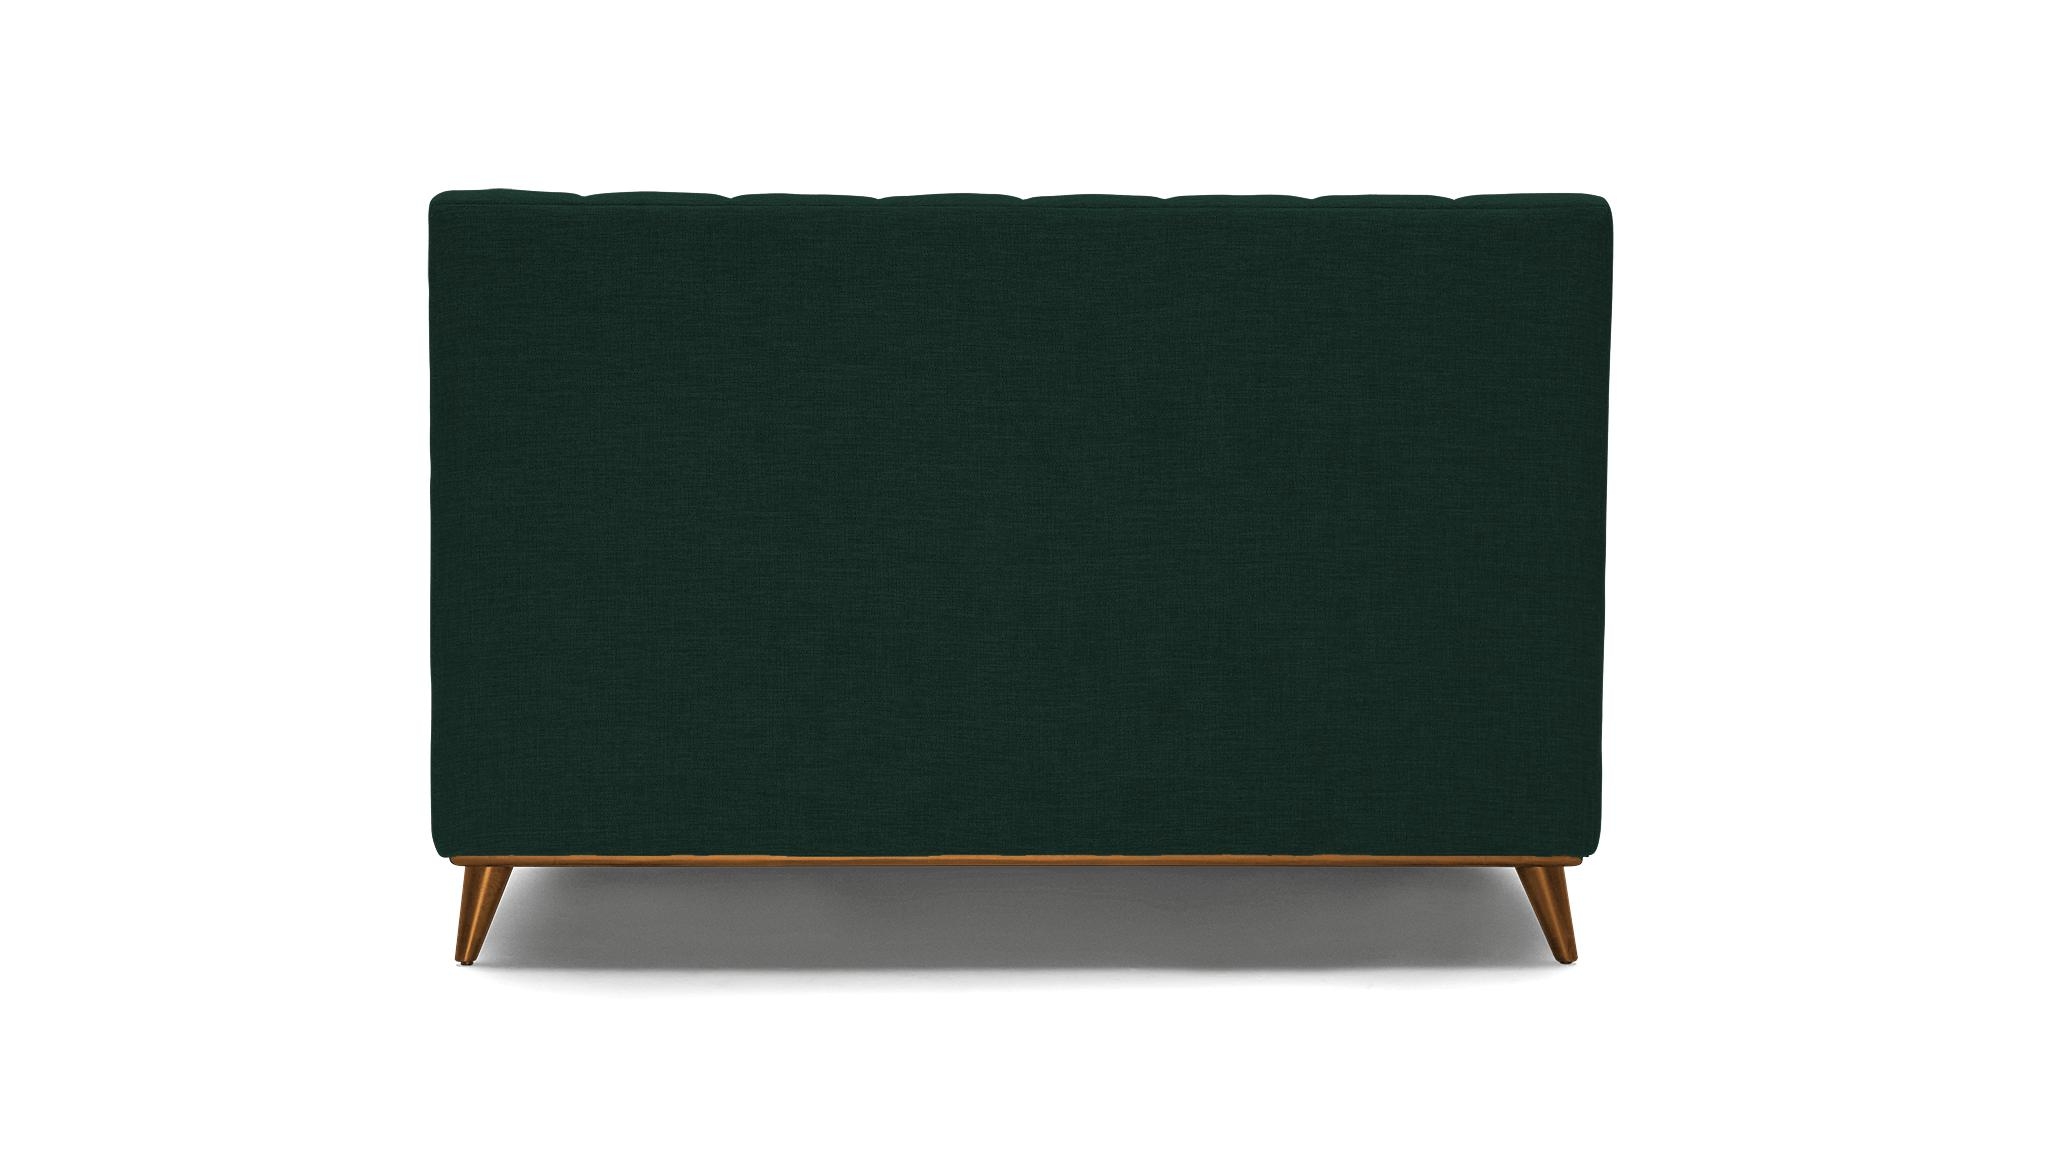 Green Hughes Mid Century Modern Bed - Royale Evergreen - Mocha - Queen - Image 4